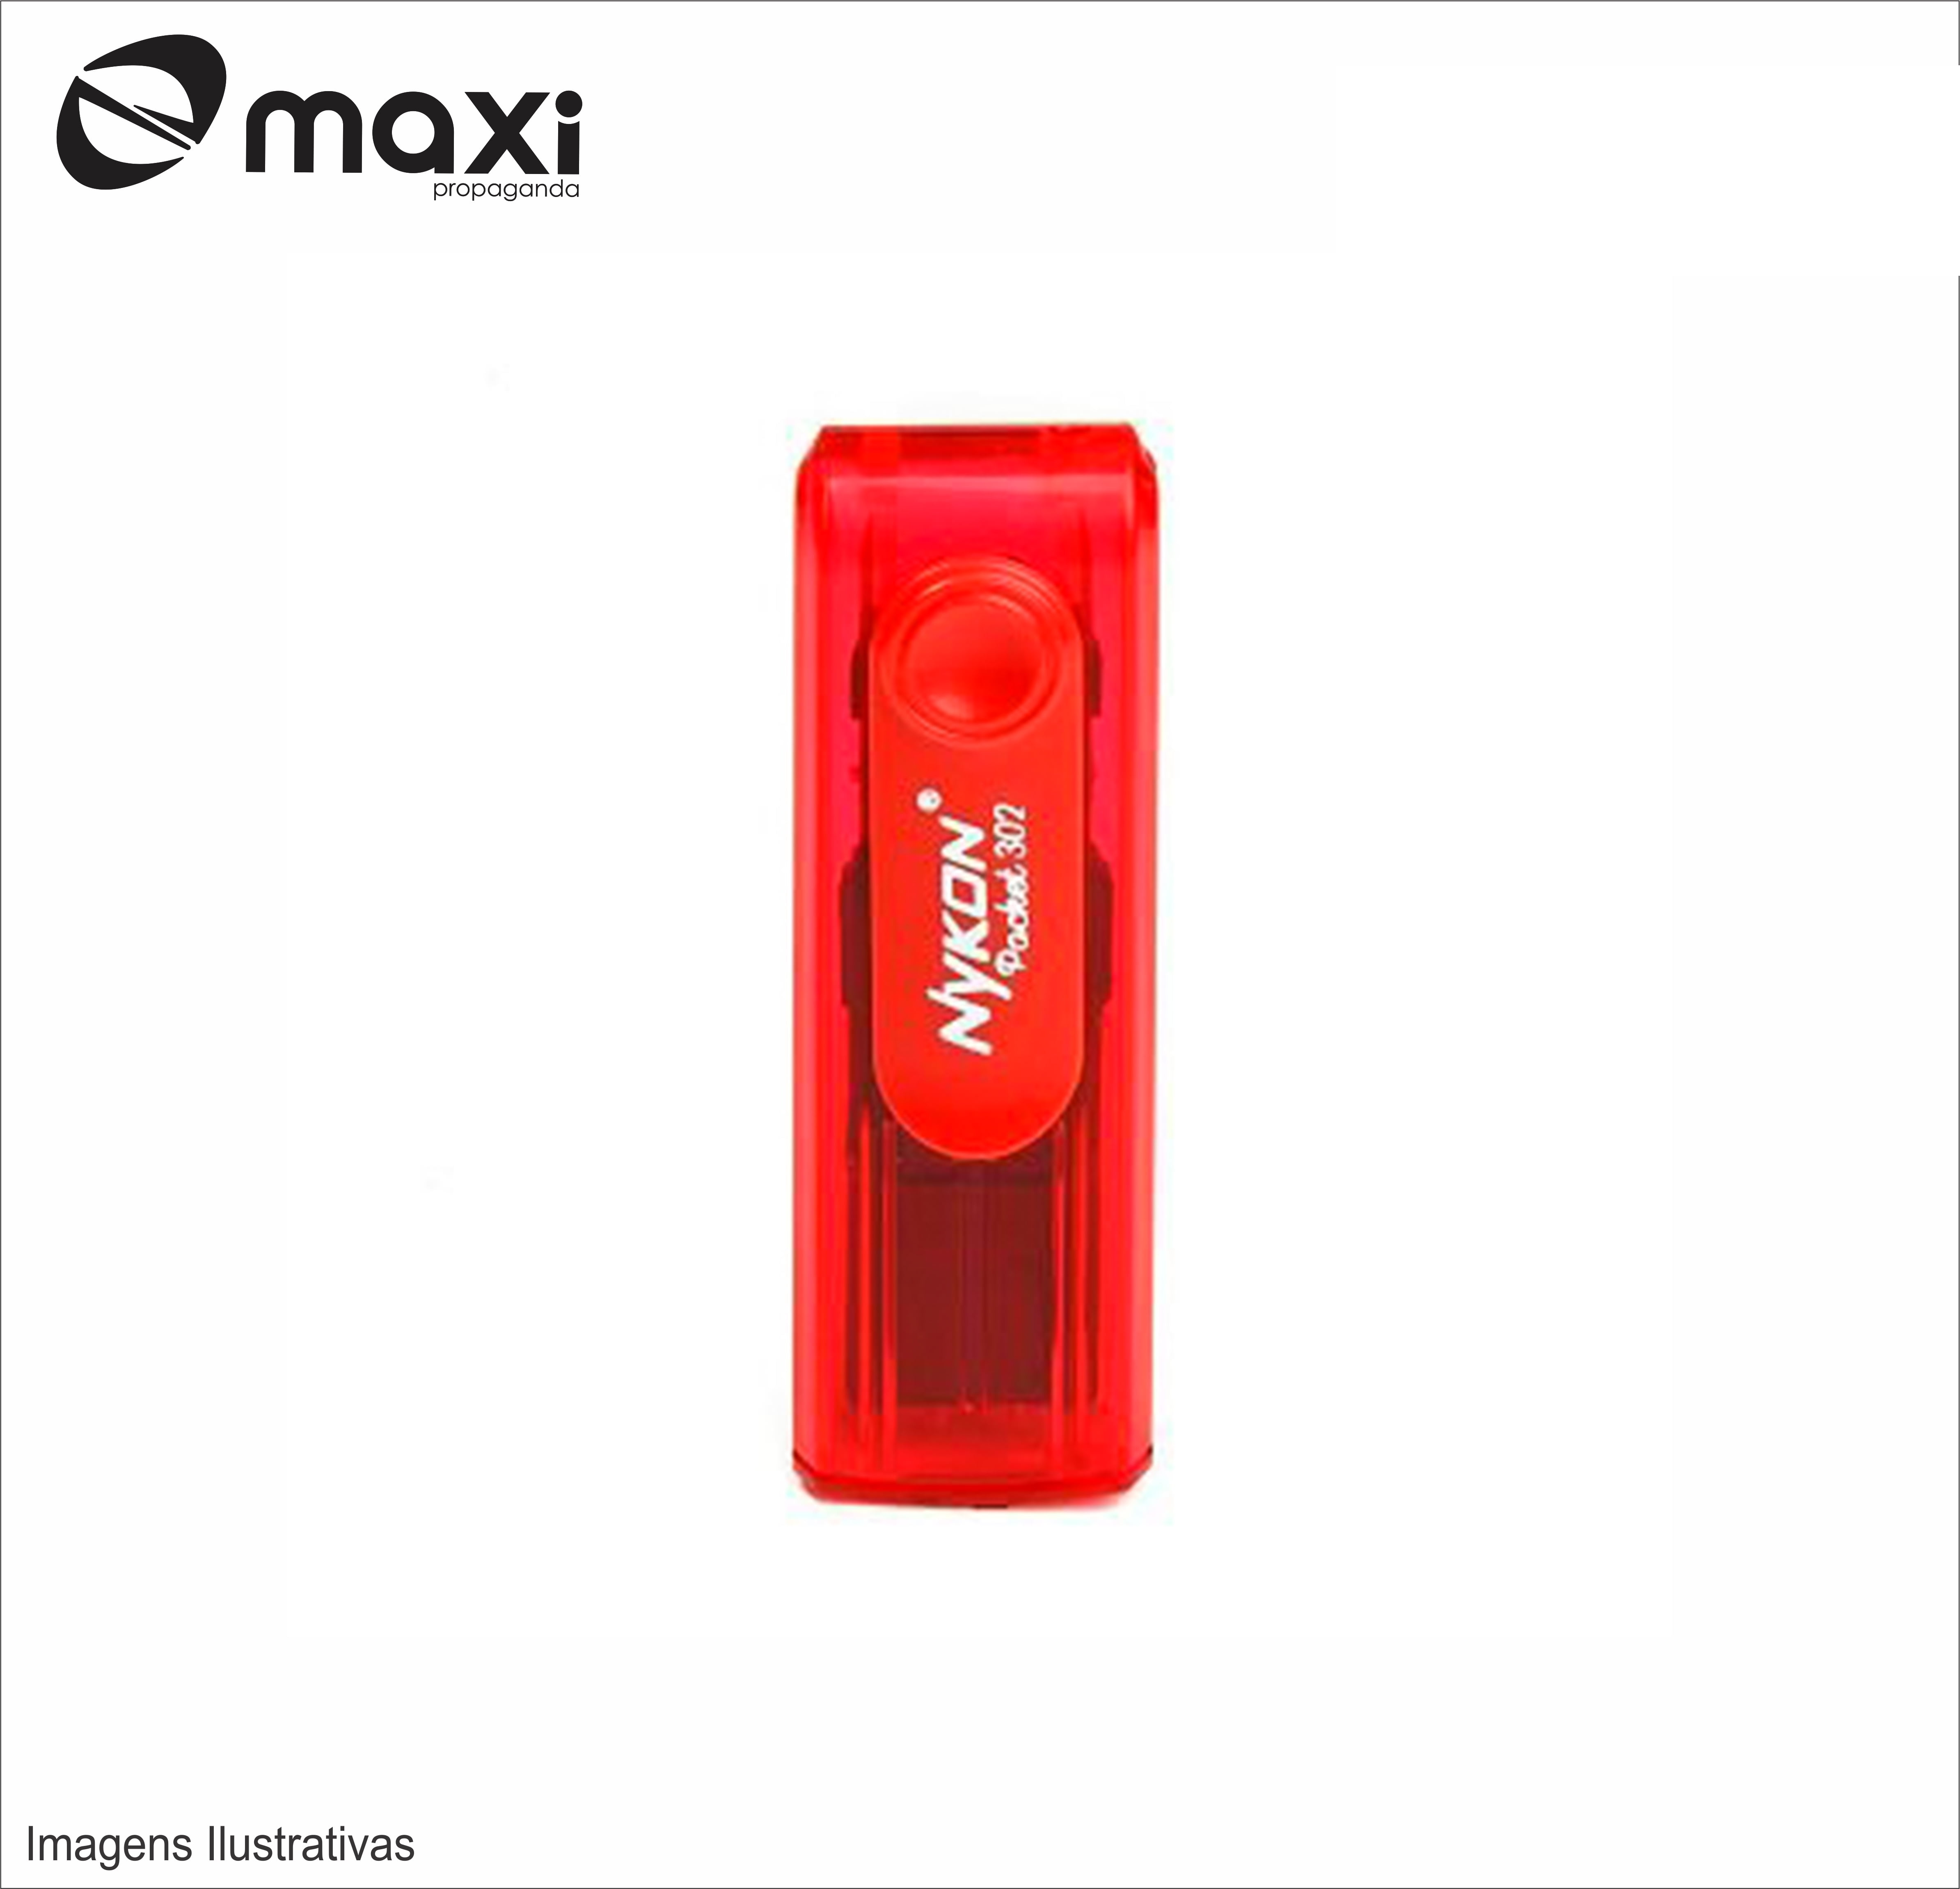 Carimbo Automático Nikon Pocket 302 - Vermelho